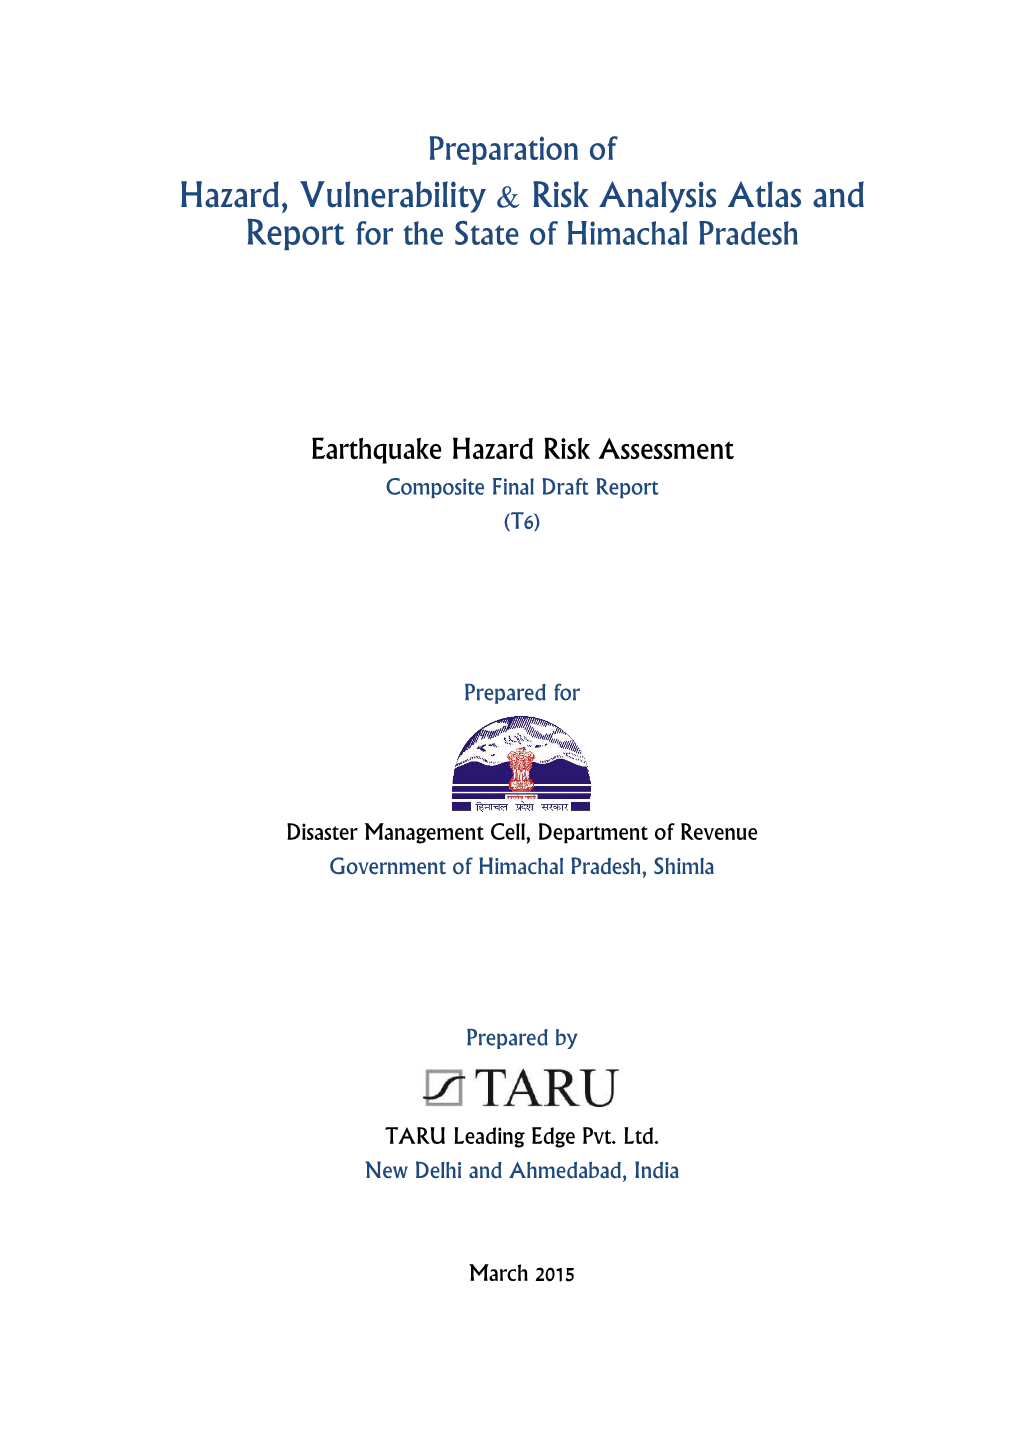 Seismic Hazard of Himachal Pradesh